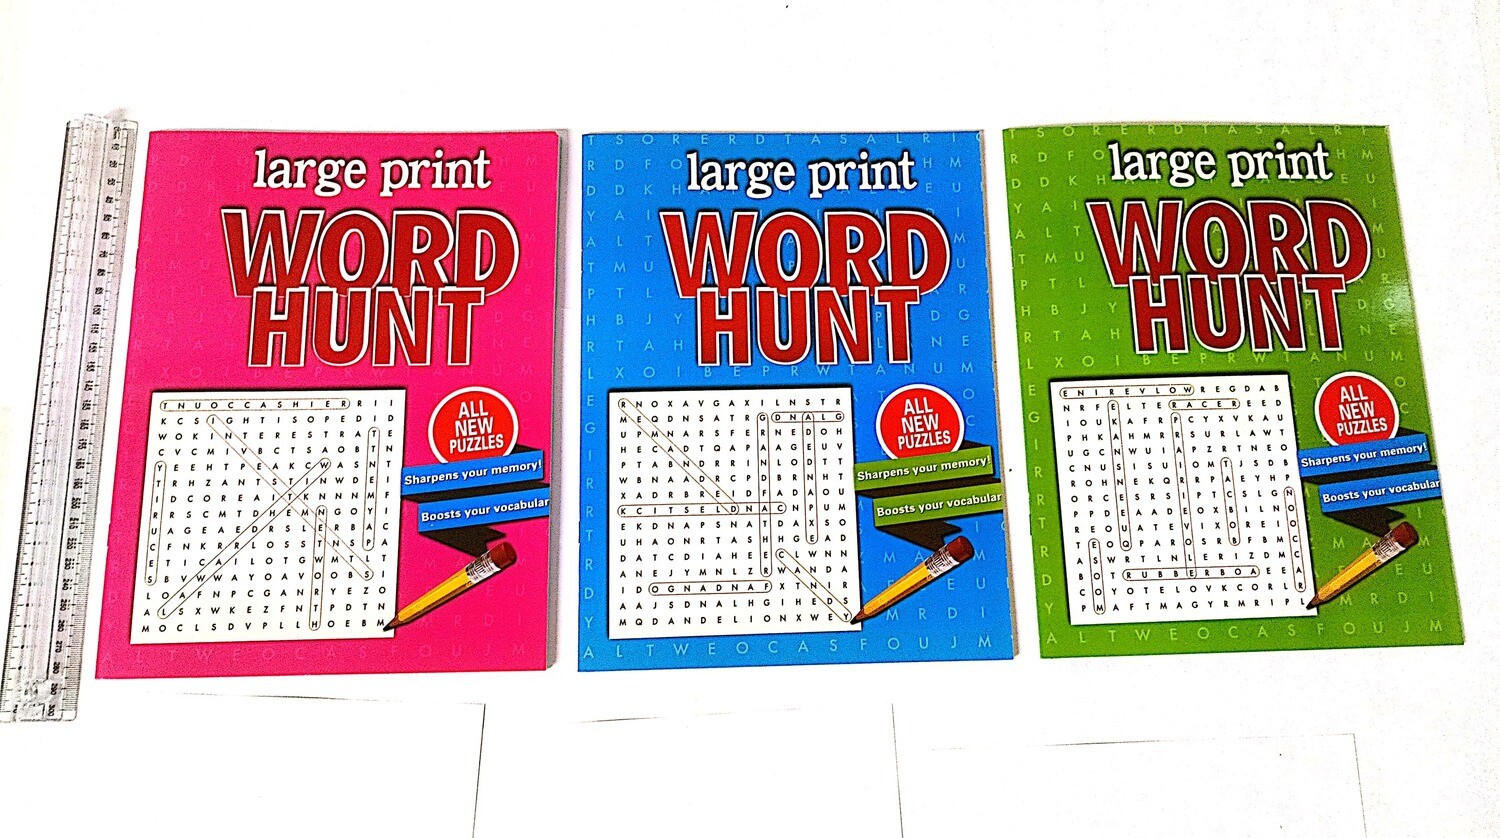 Large Print Word Hunt (R15 each)